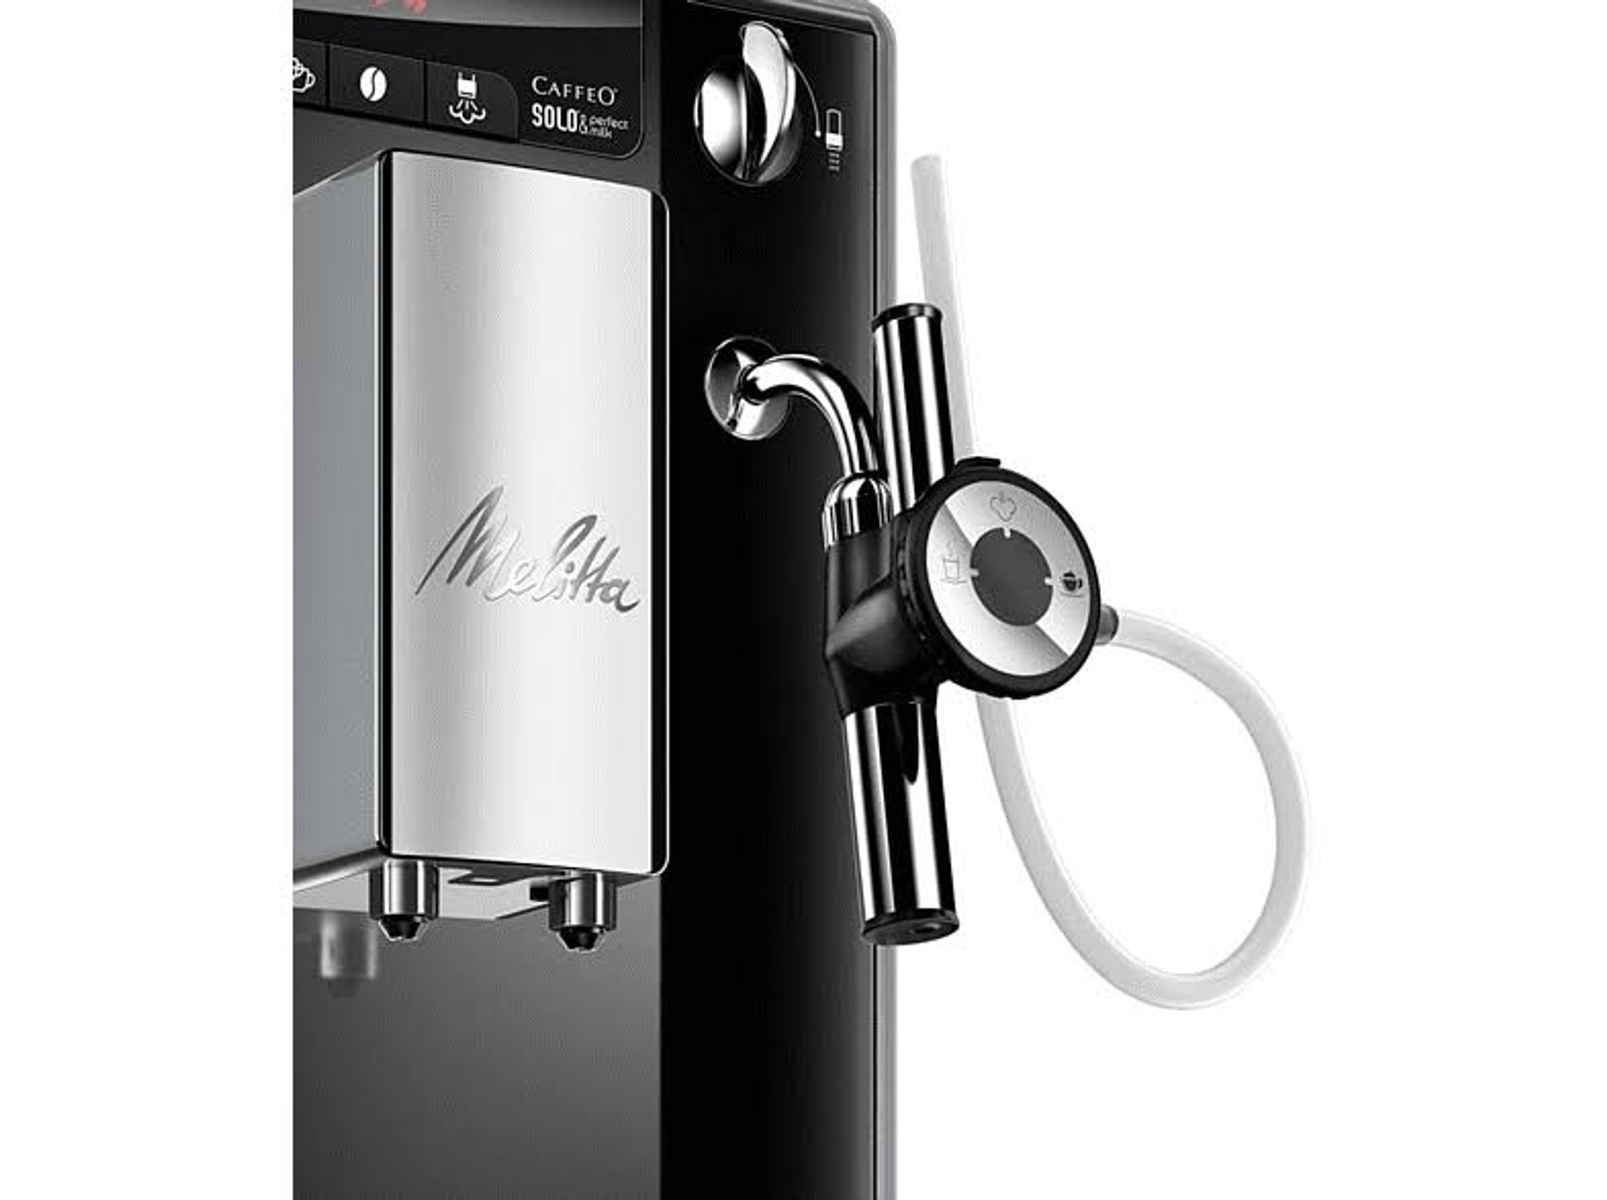 MELITTA Solo & Kaffeevollautomat E schwarz Milk 957-201 Perfect